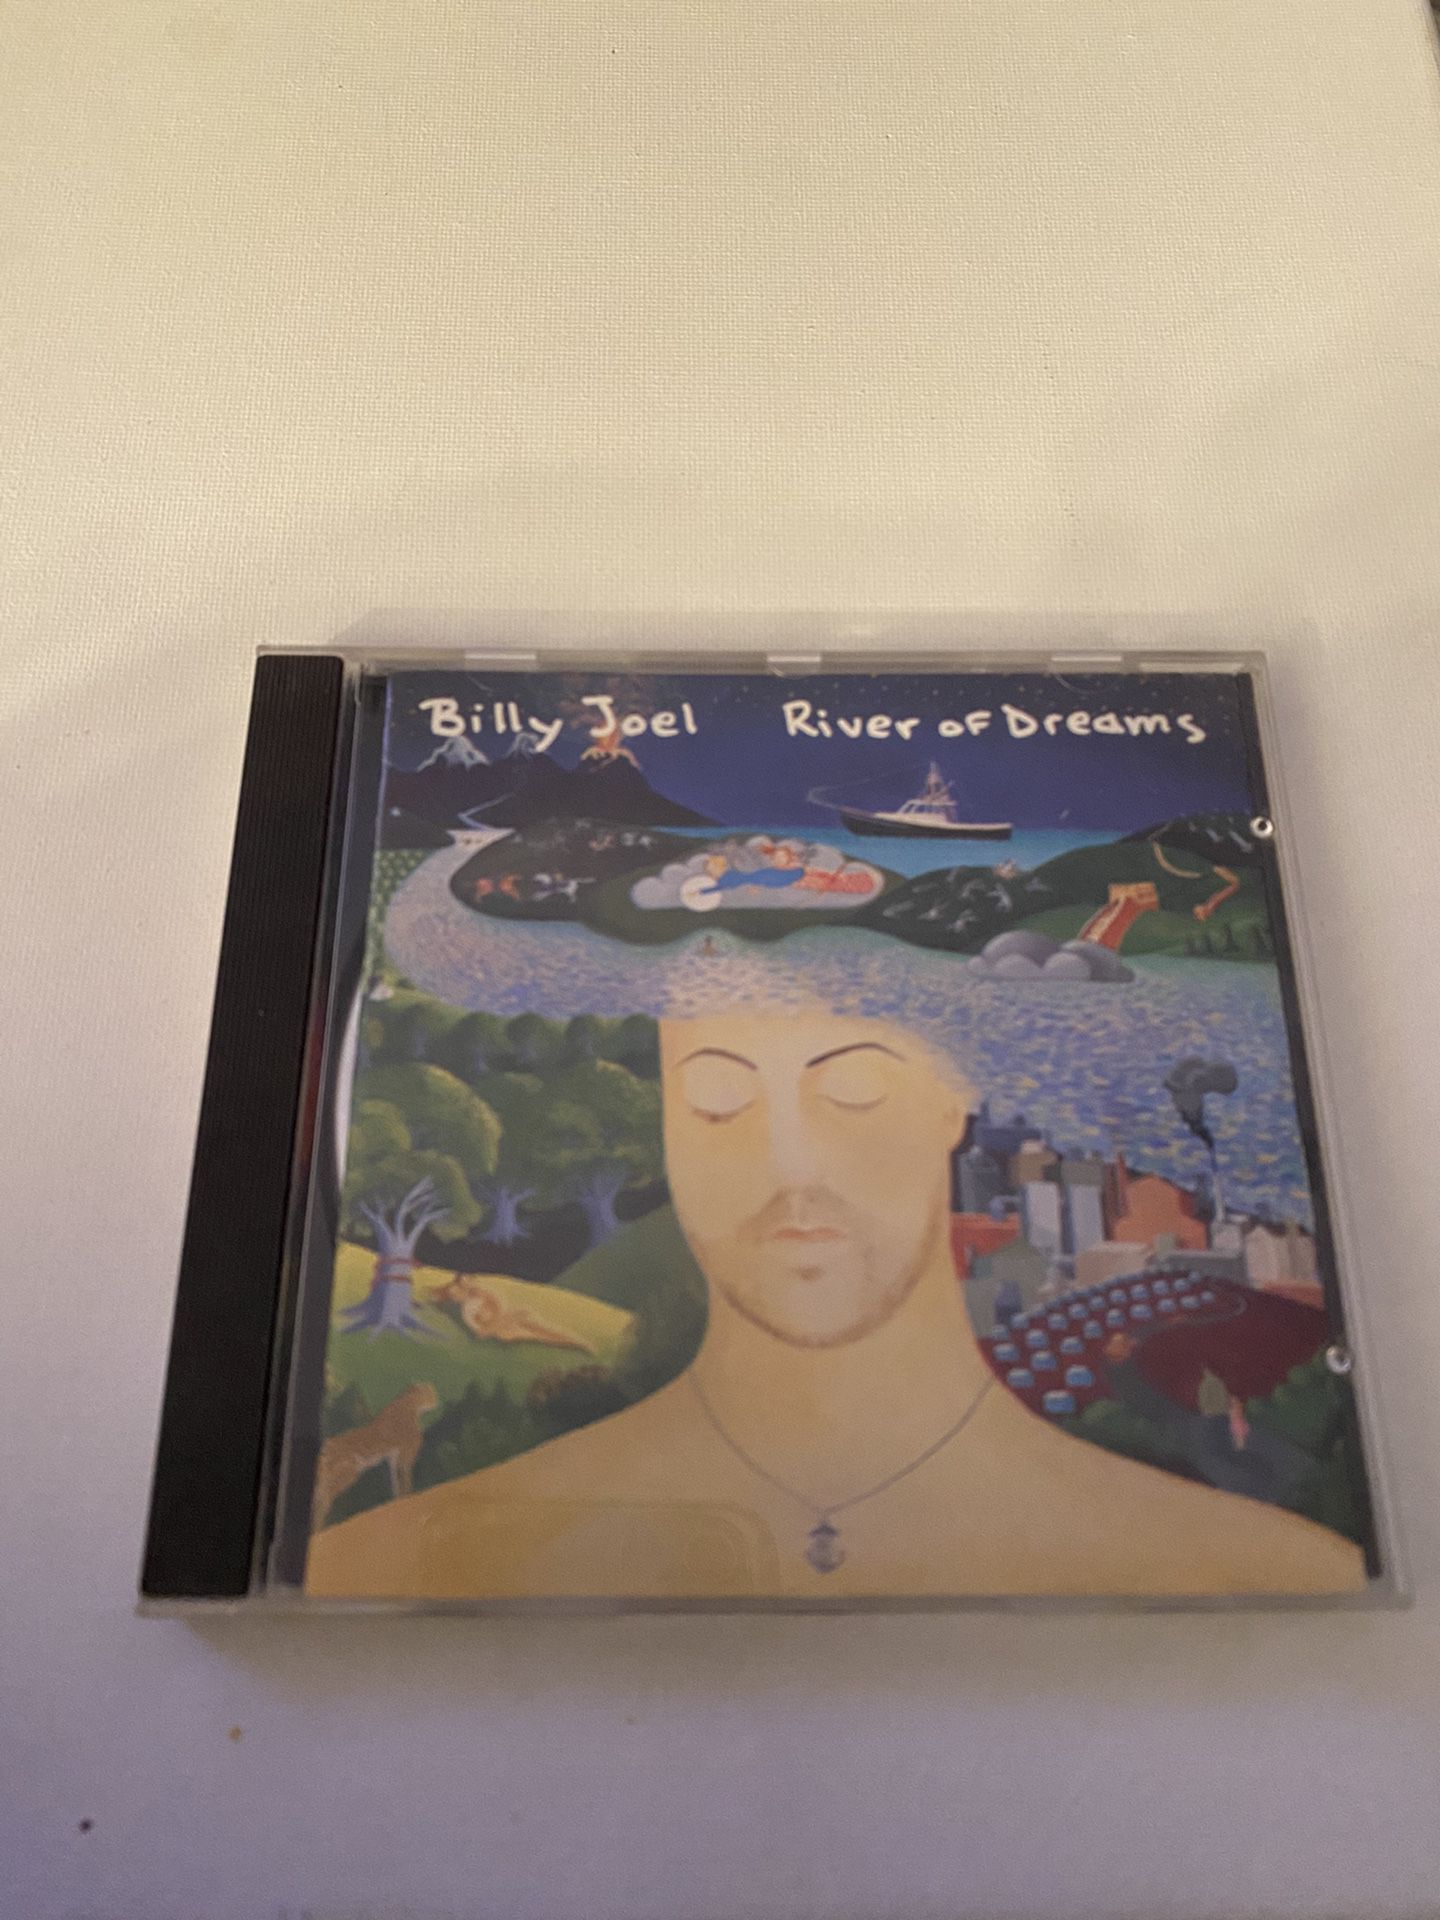 Billy Joel River of Dreams CD